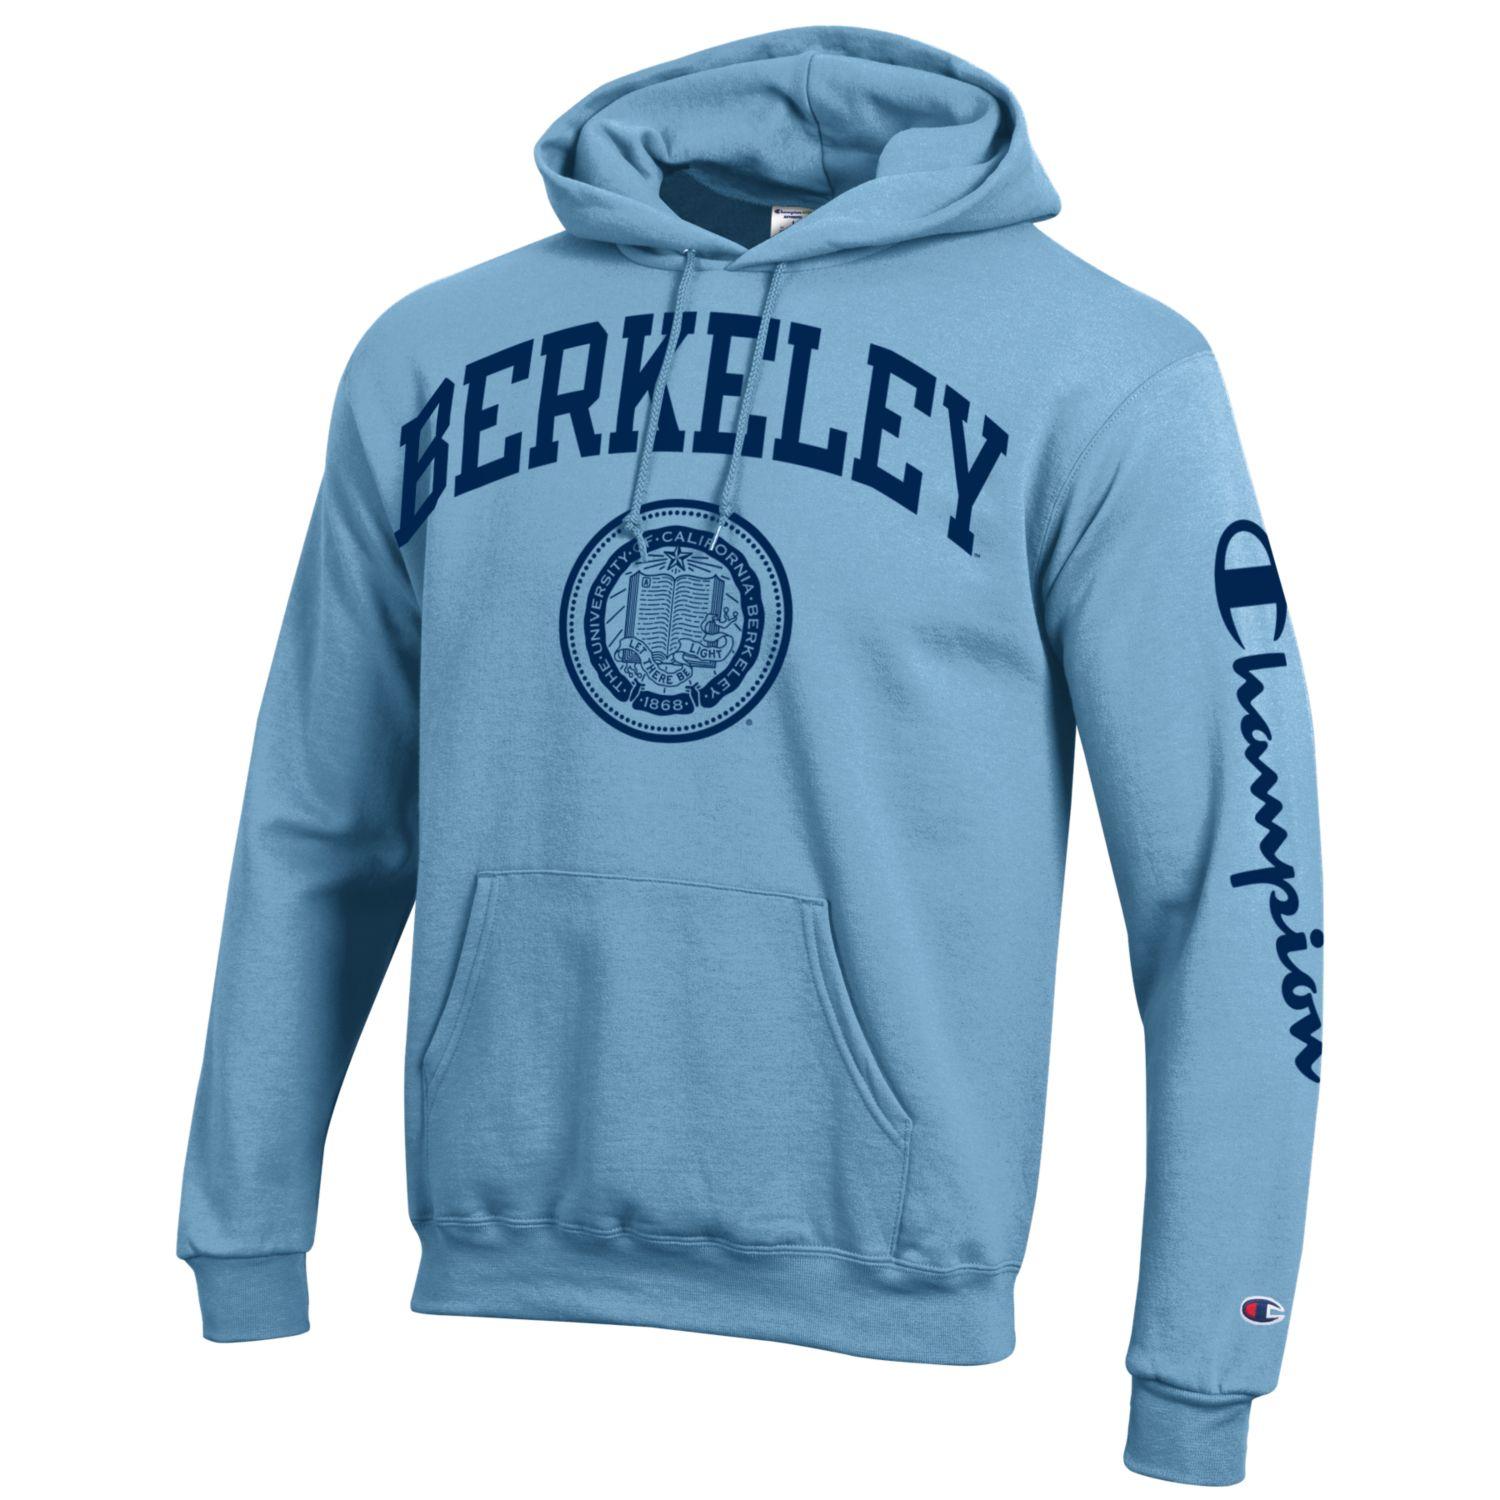 U.C. Berkeley arch & seal with script Champion hoodie sweatshirt-Denim Blue-Shop College Wear